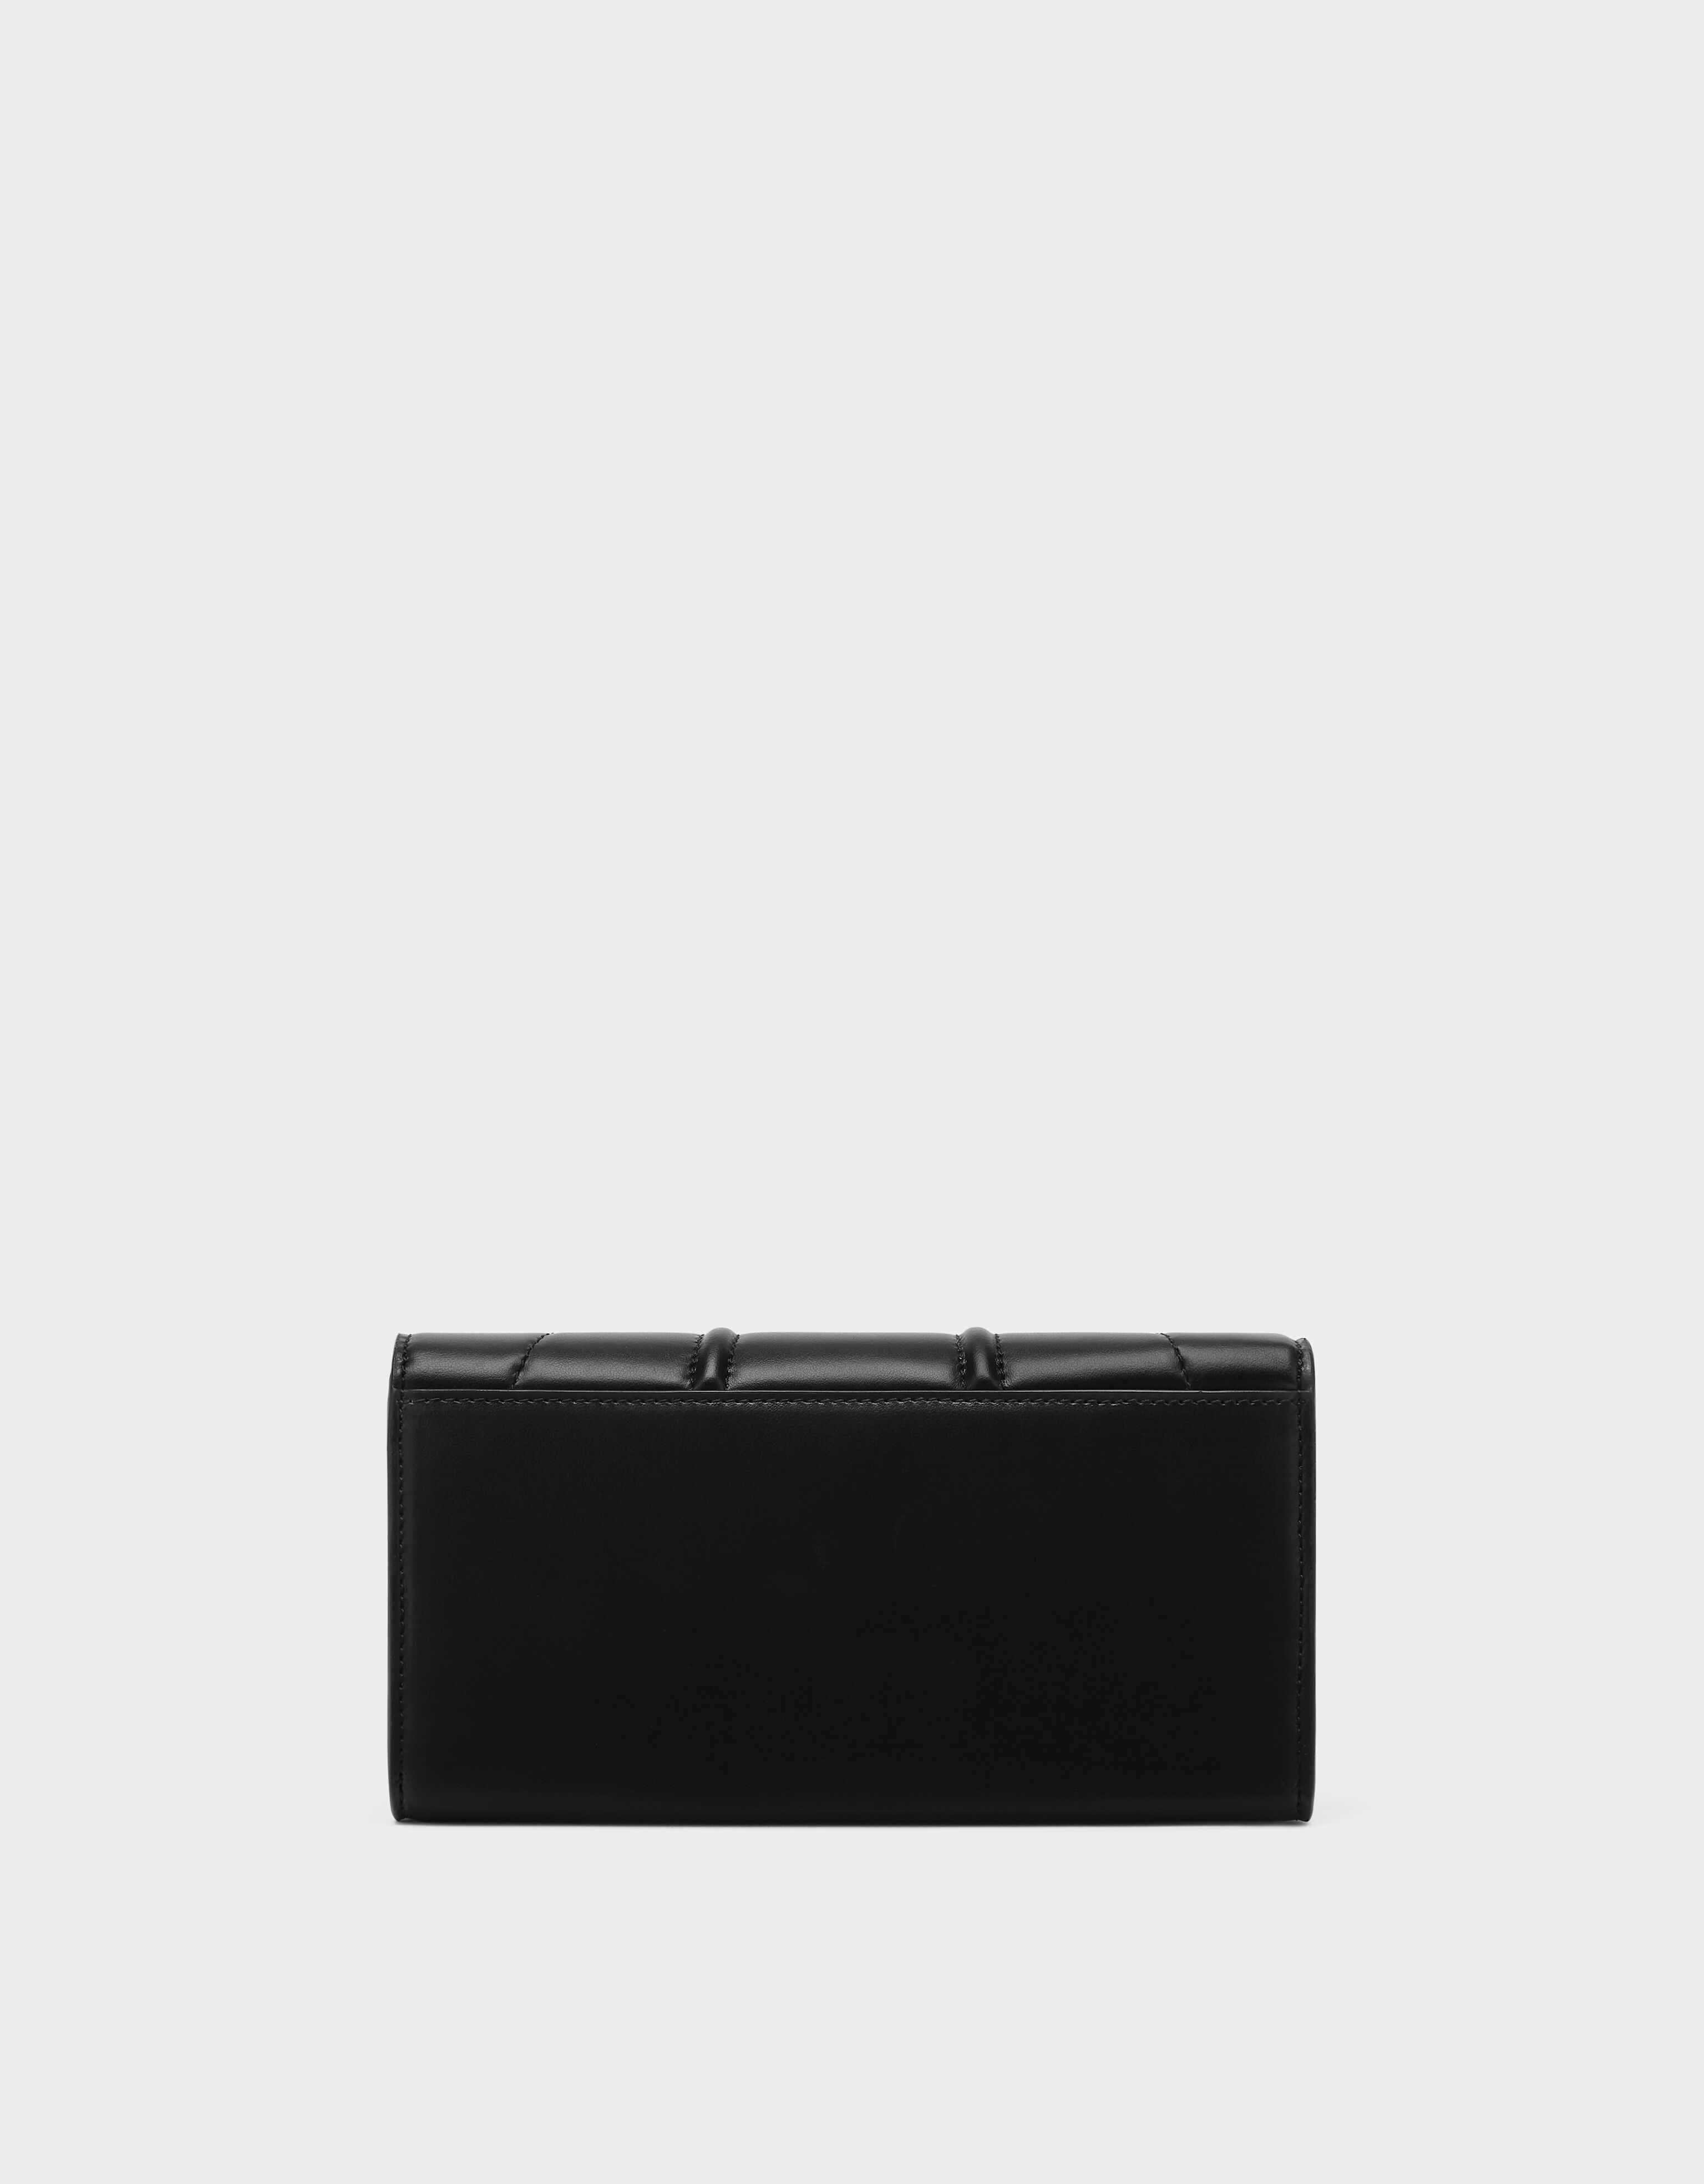 Ferrari Trifold leather wallet Black 20249f